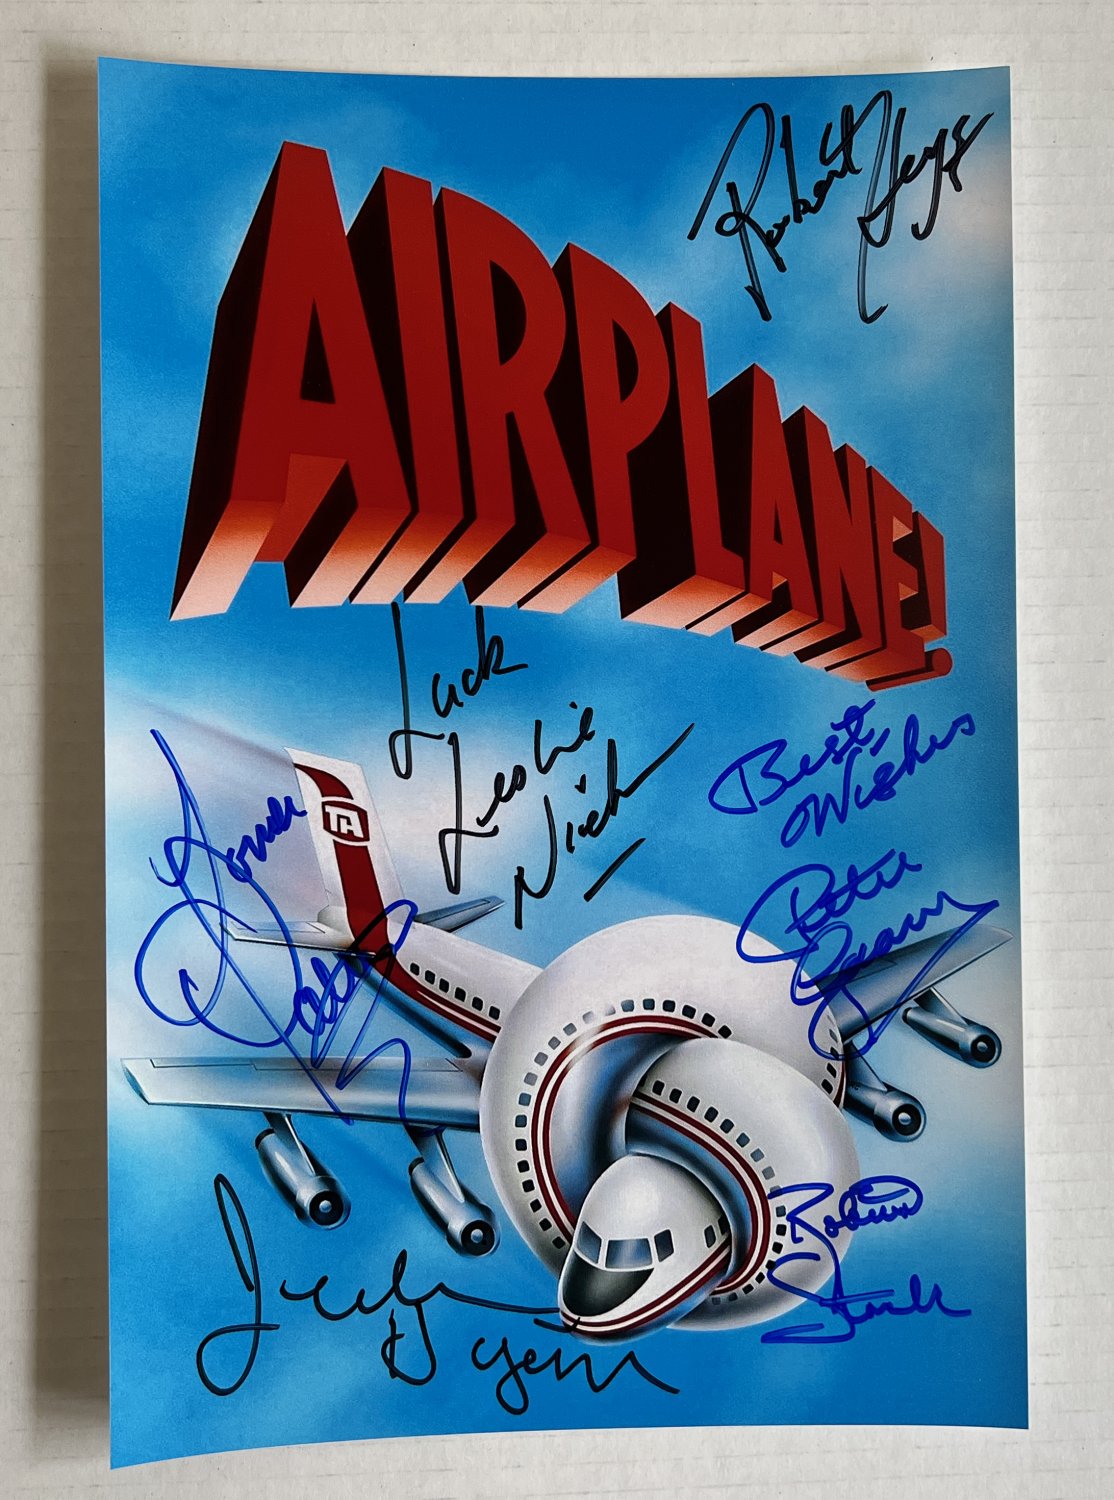 Airplane! cast signed autographed 8x12 photo Leslie Nielsen Robert Hays autographs Airplane